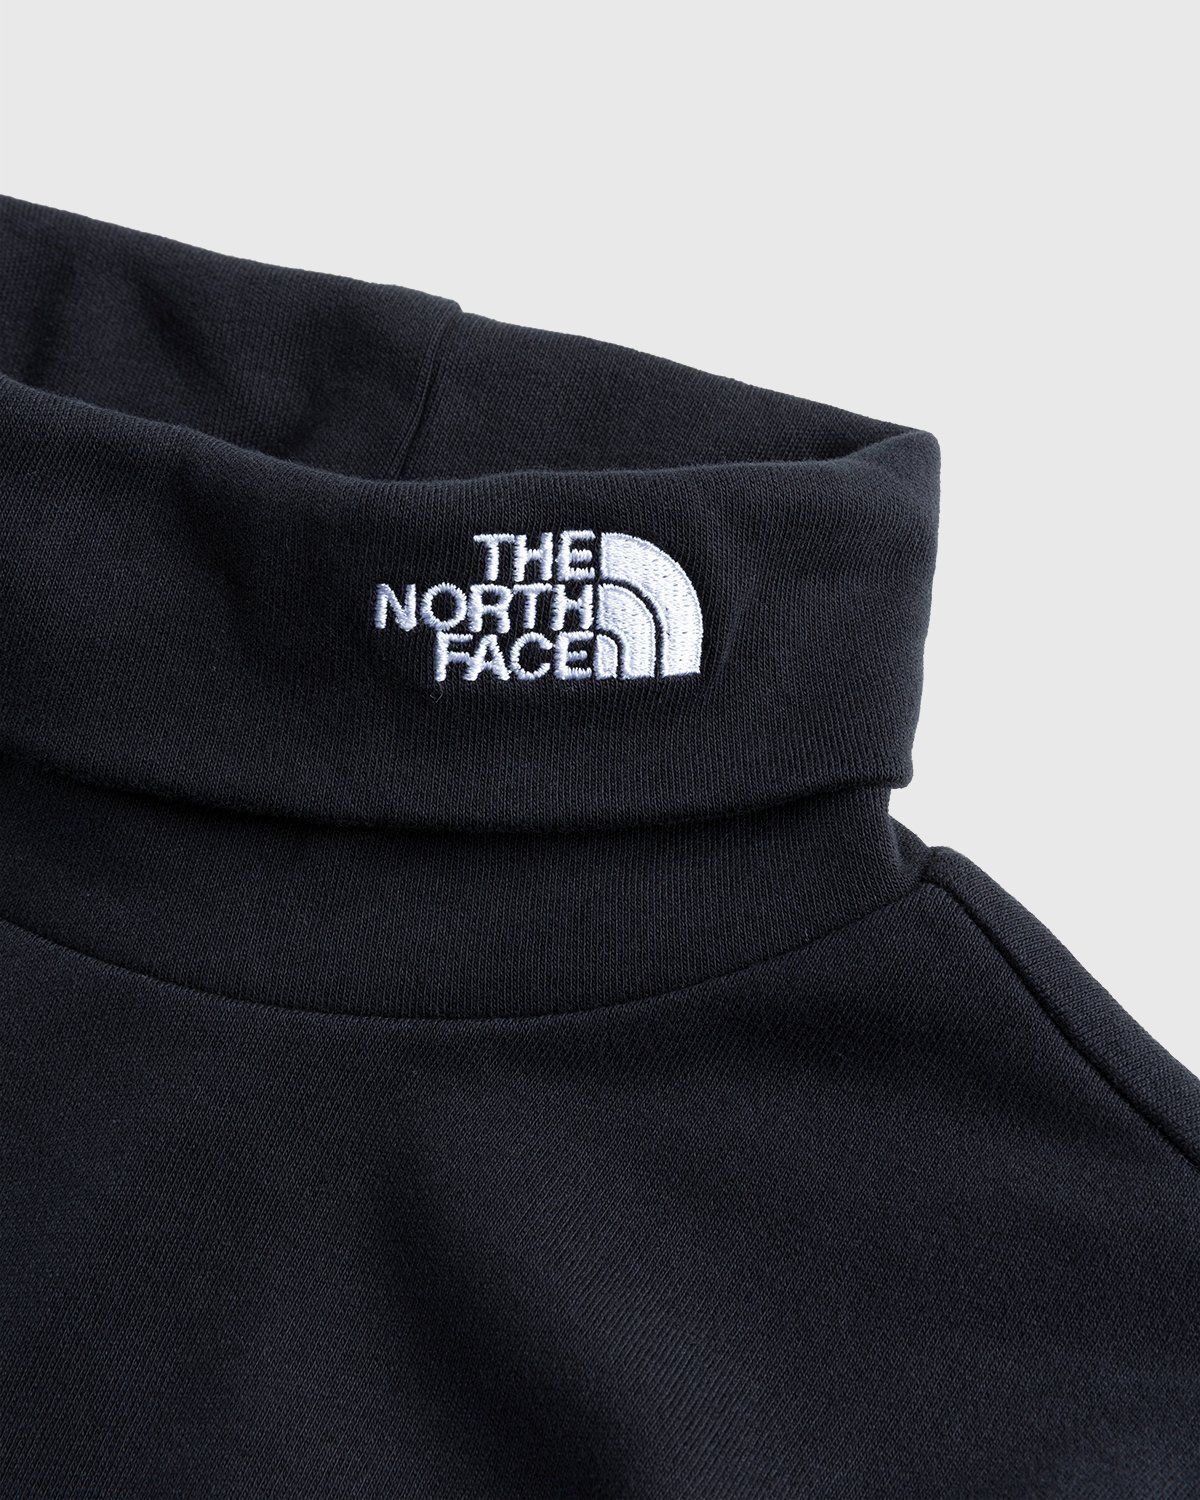 The North Face – Longsleeve Black - Longsleeves - Black - Image 3